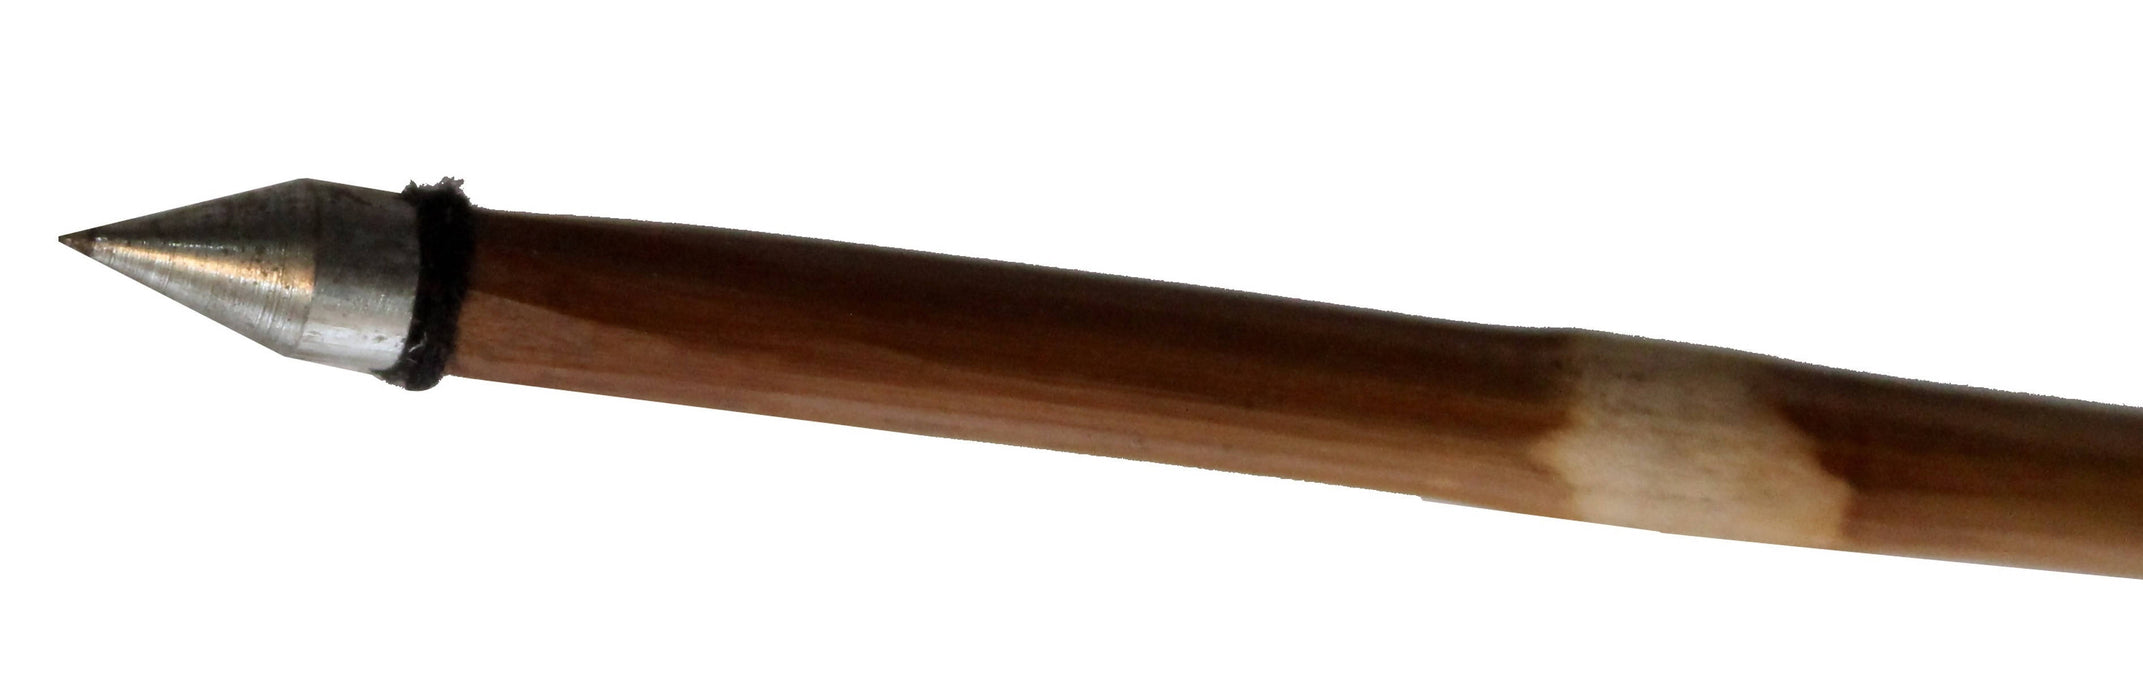 Short Natural Fletch Traditional Cane Arrow with Pro Nock ASNFTCAPN